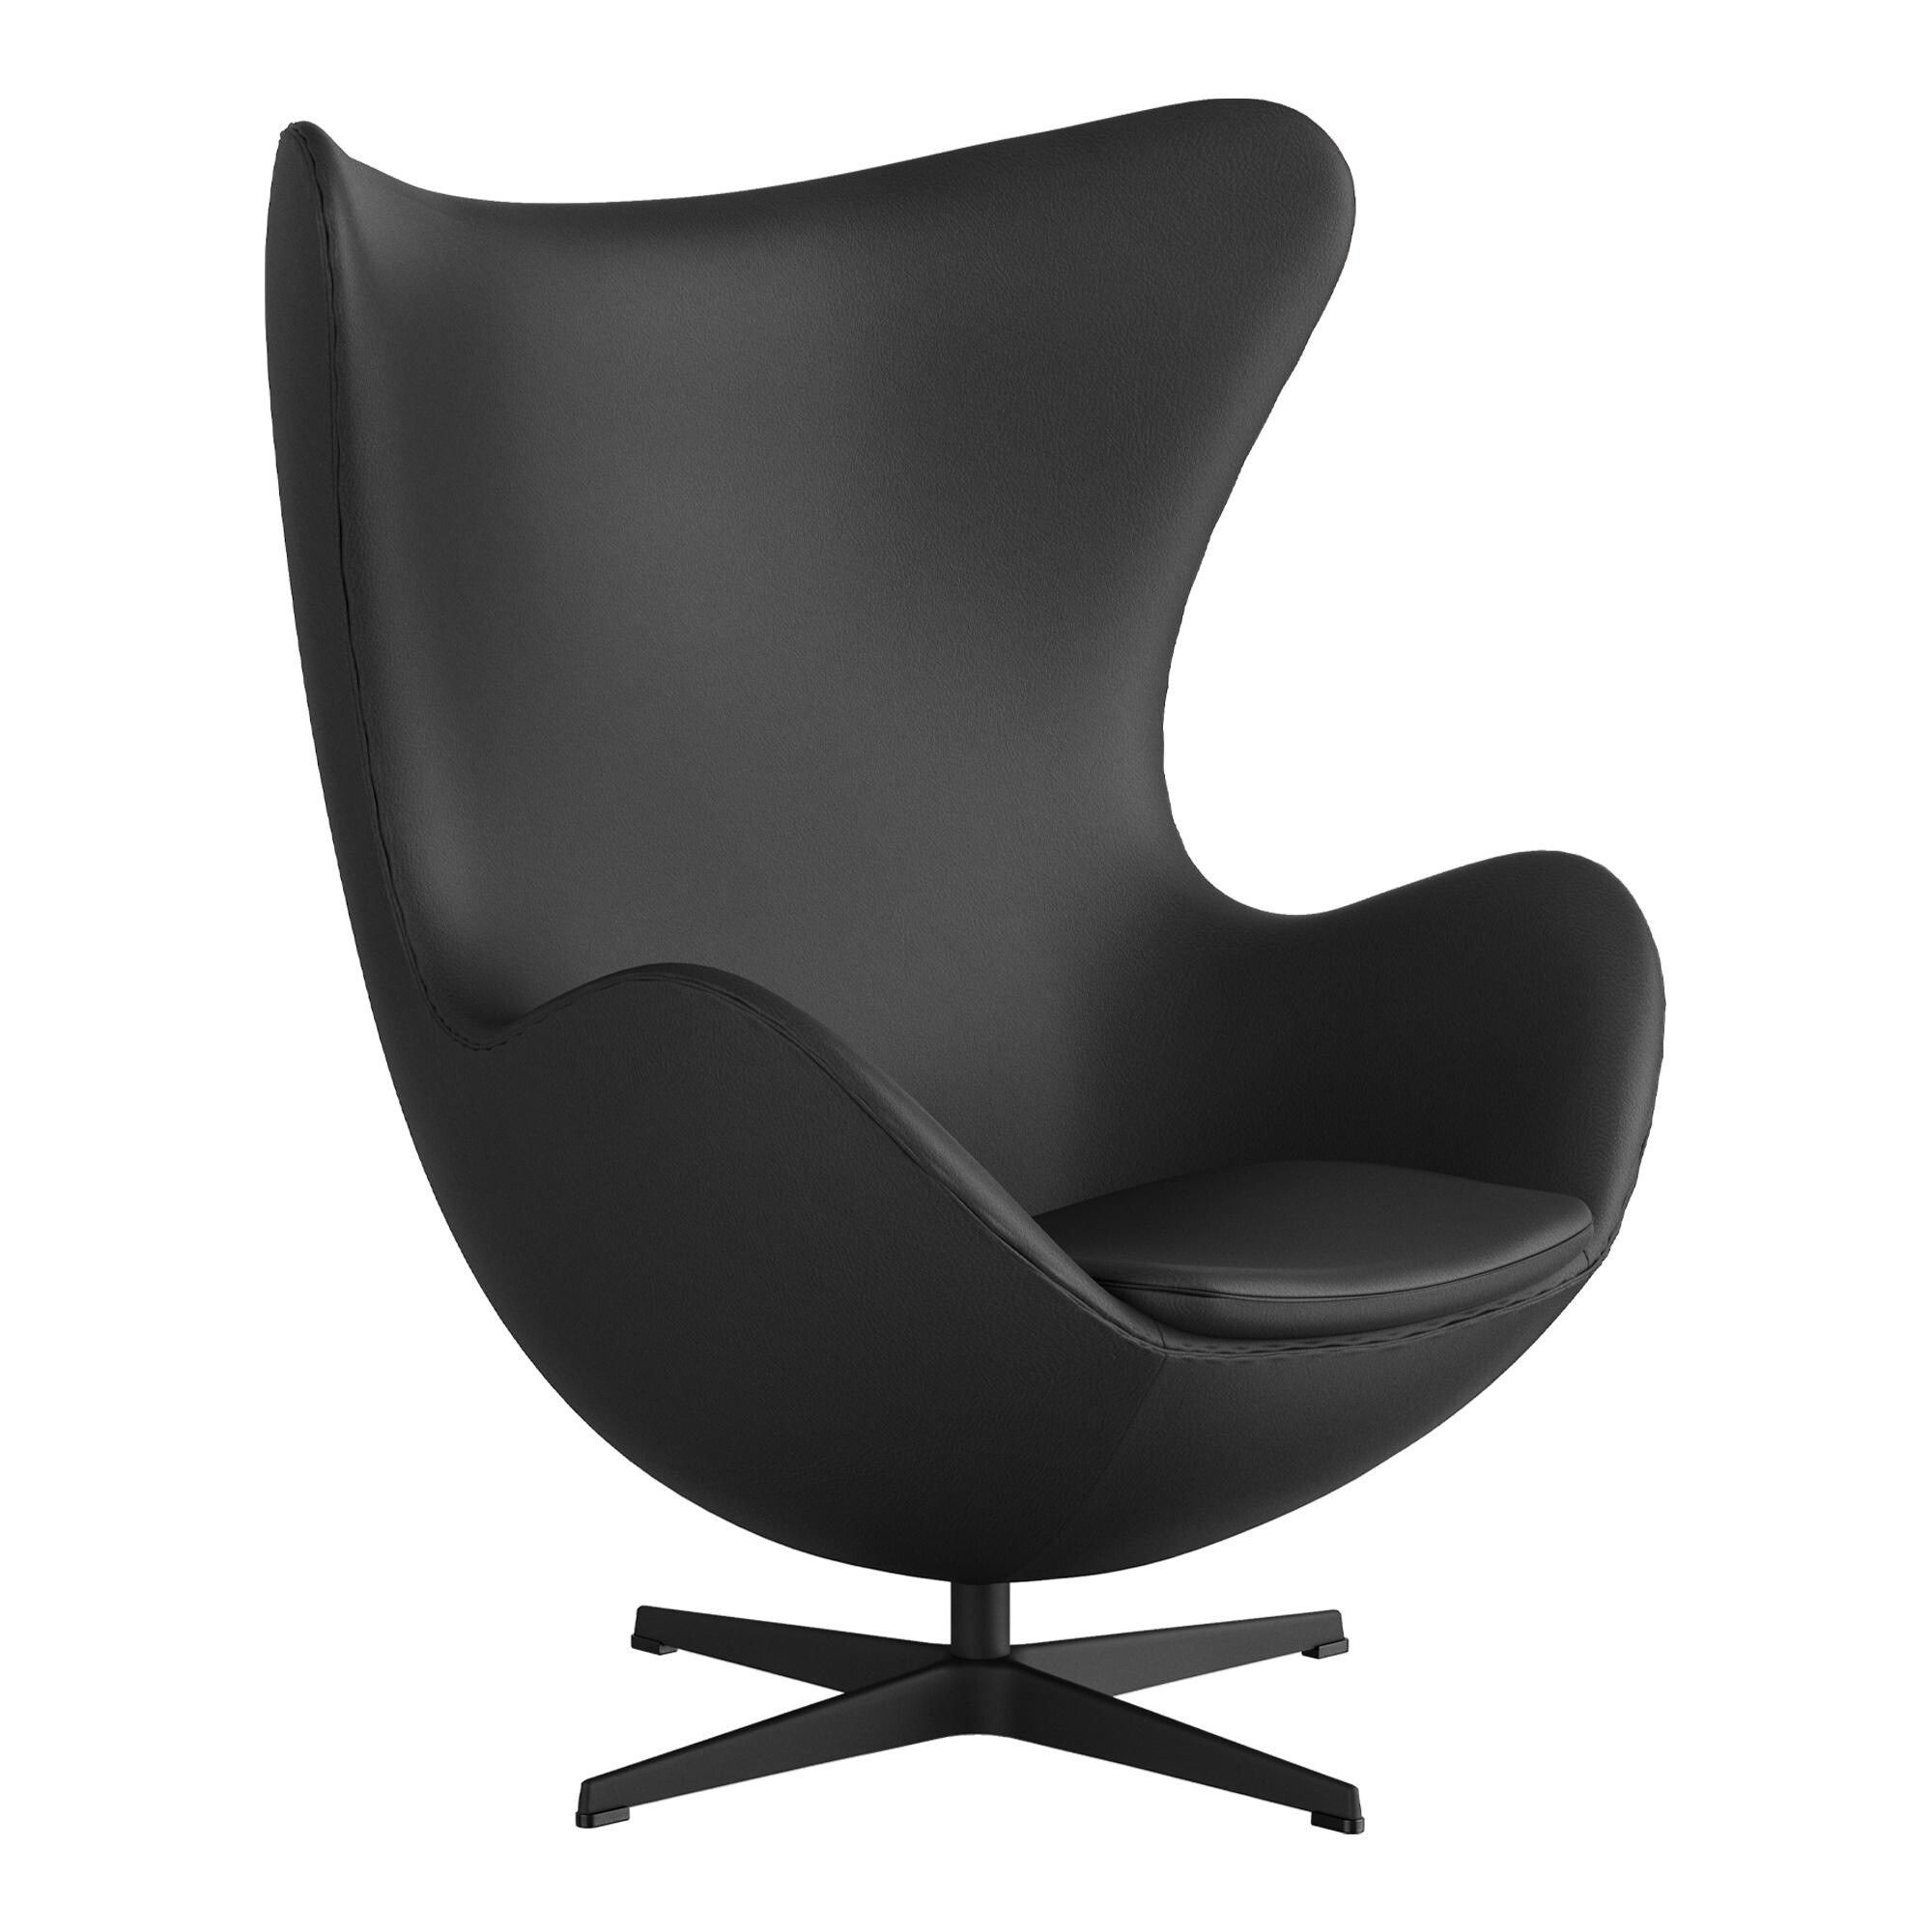 2020 Egg Chair Loungechair, Black Leather Egg Chair